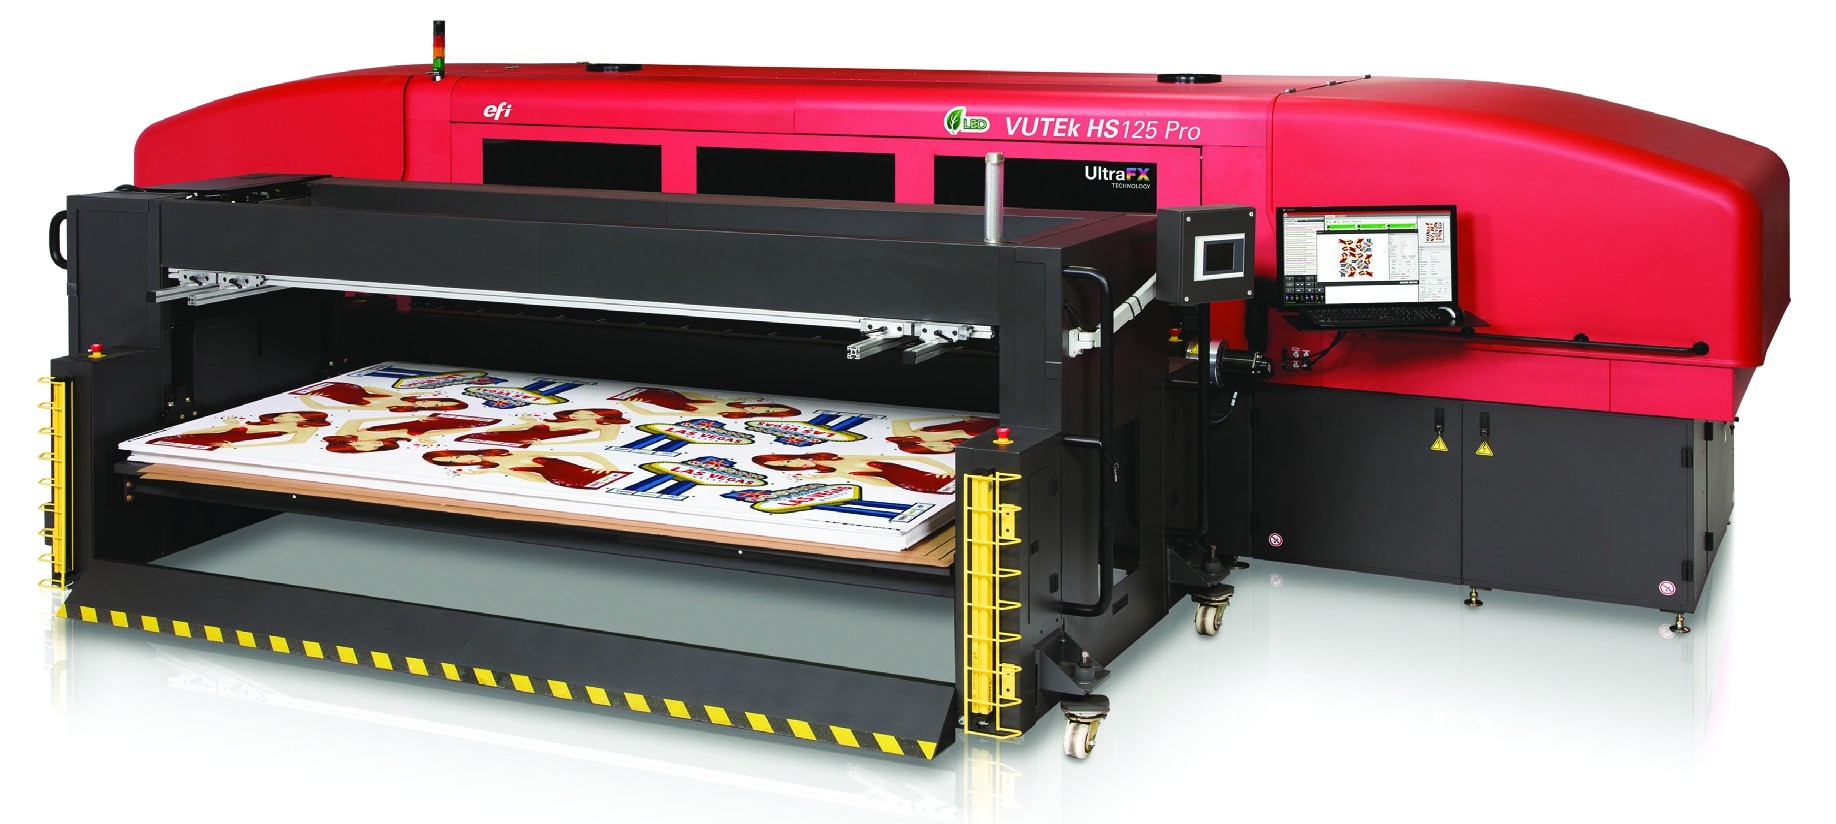 EFI представляет на SGIA Expo 2015 три гибридных УФ-принтера, а также модели Reggiani и Matan